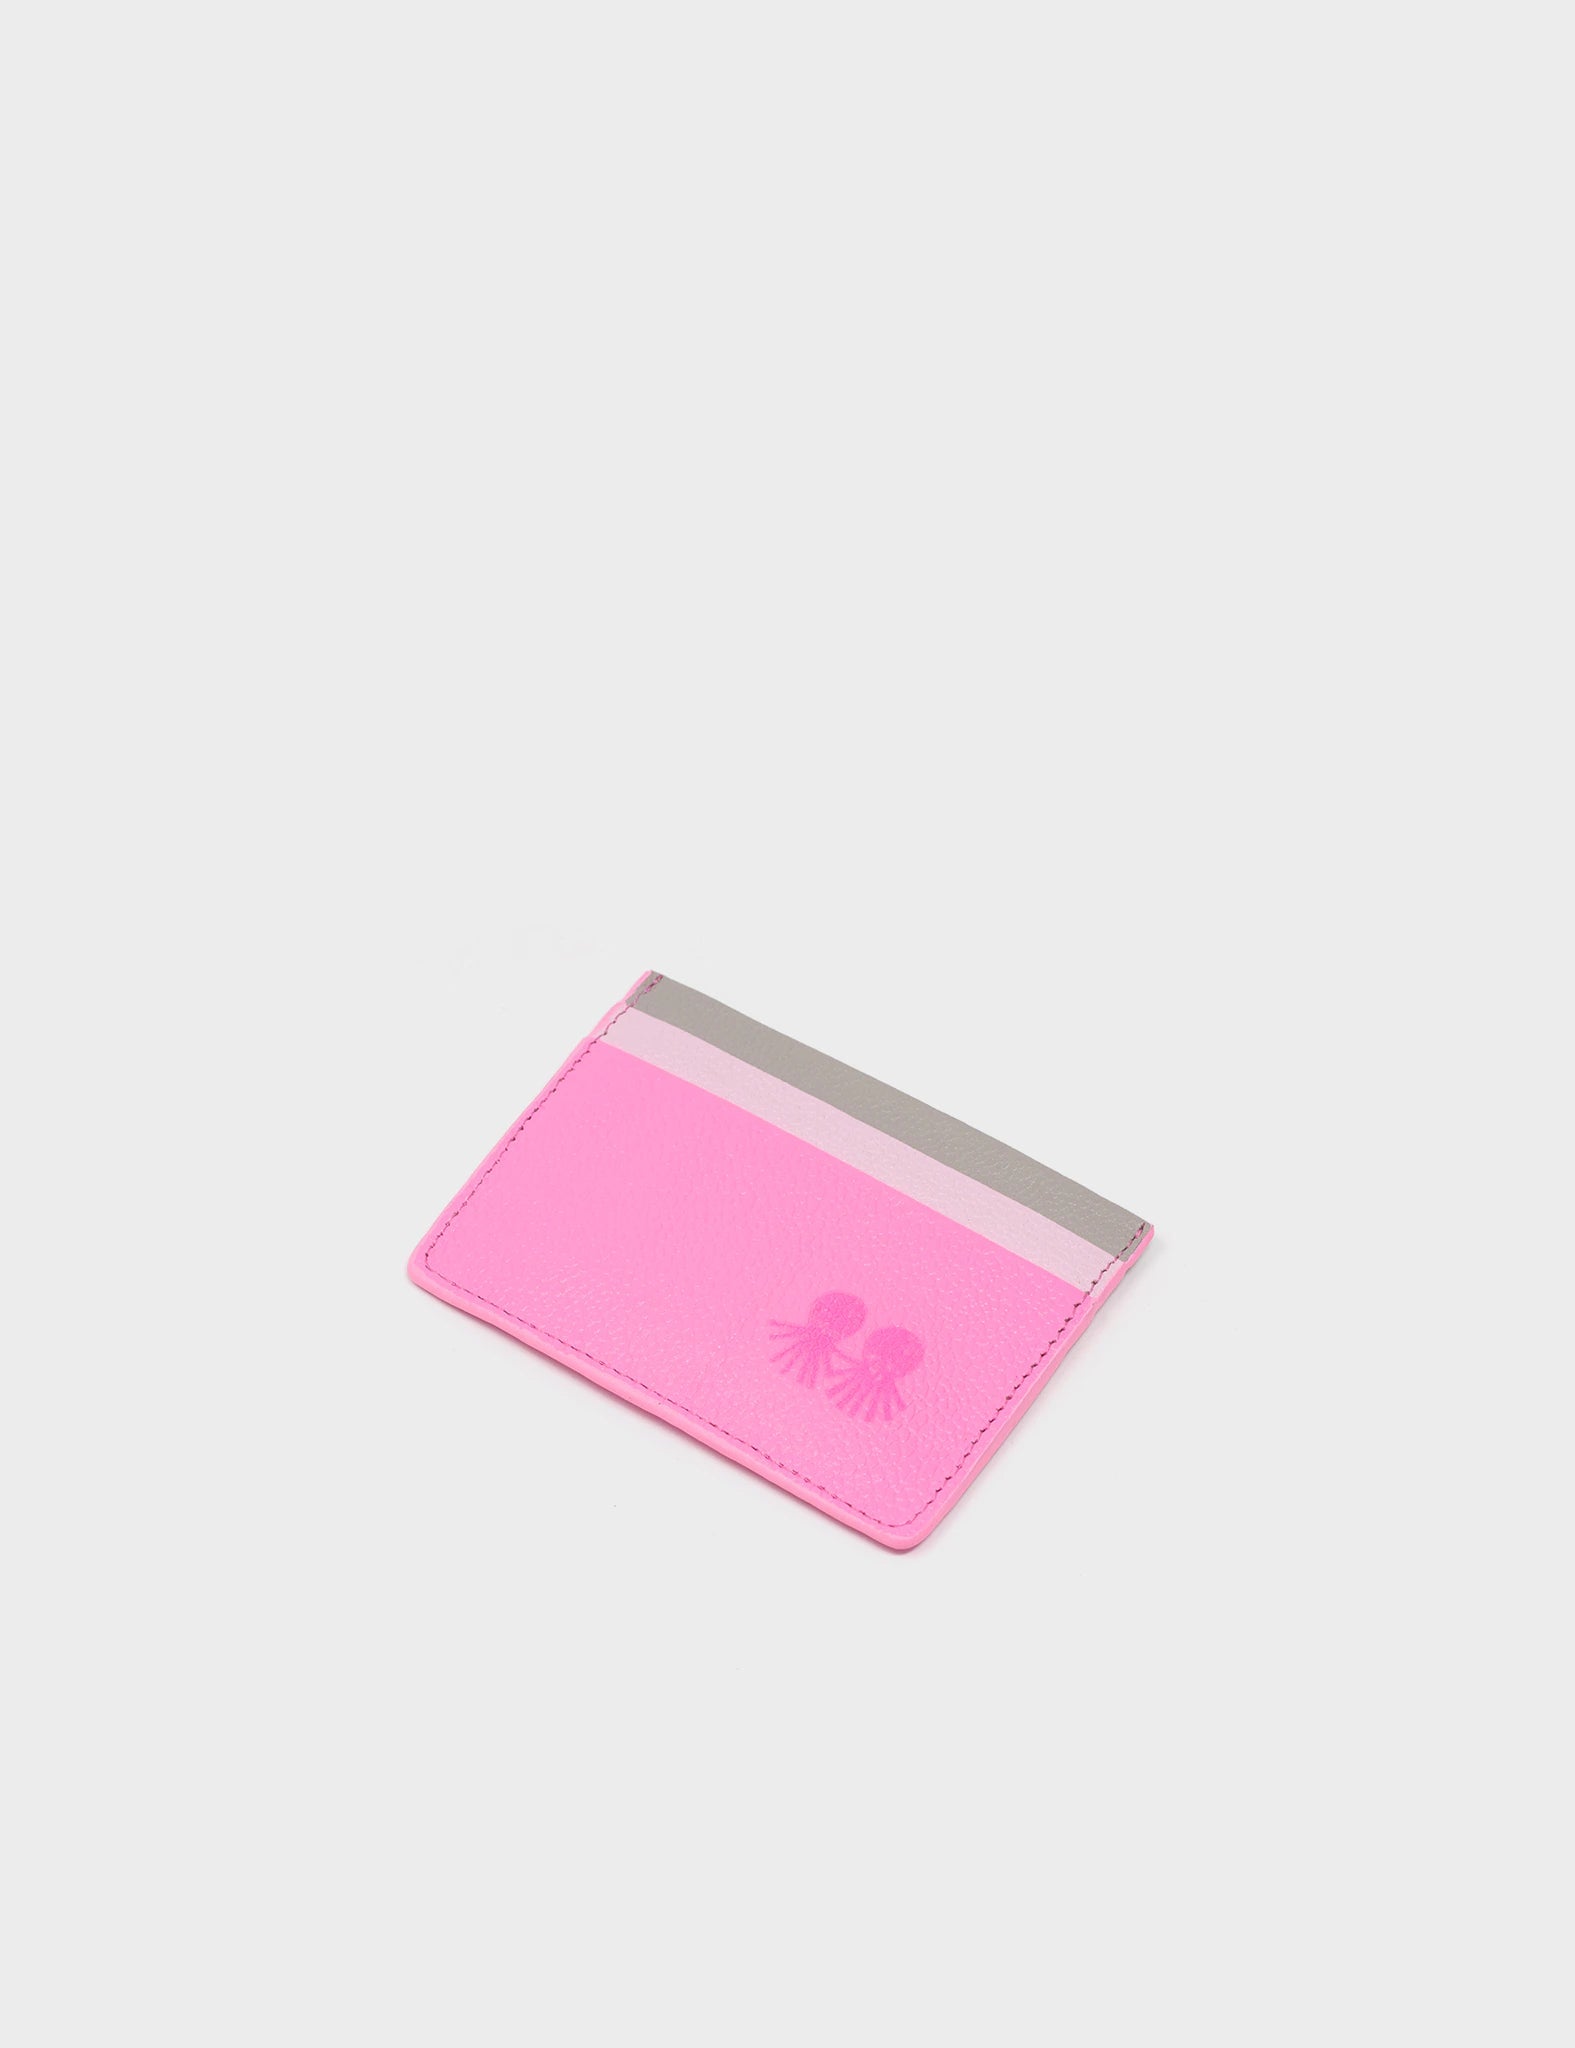 Filium Cardholder - Bubblegum pink, rosa and gray Print - Front corner angle view